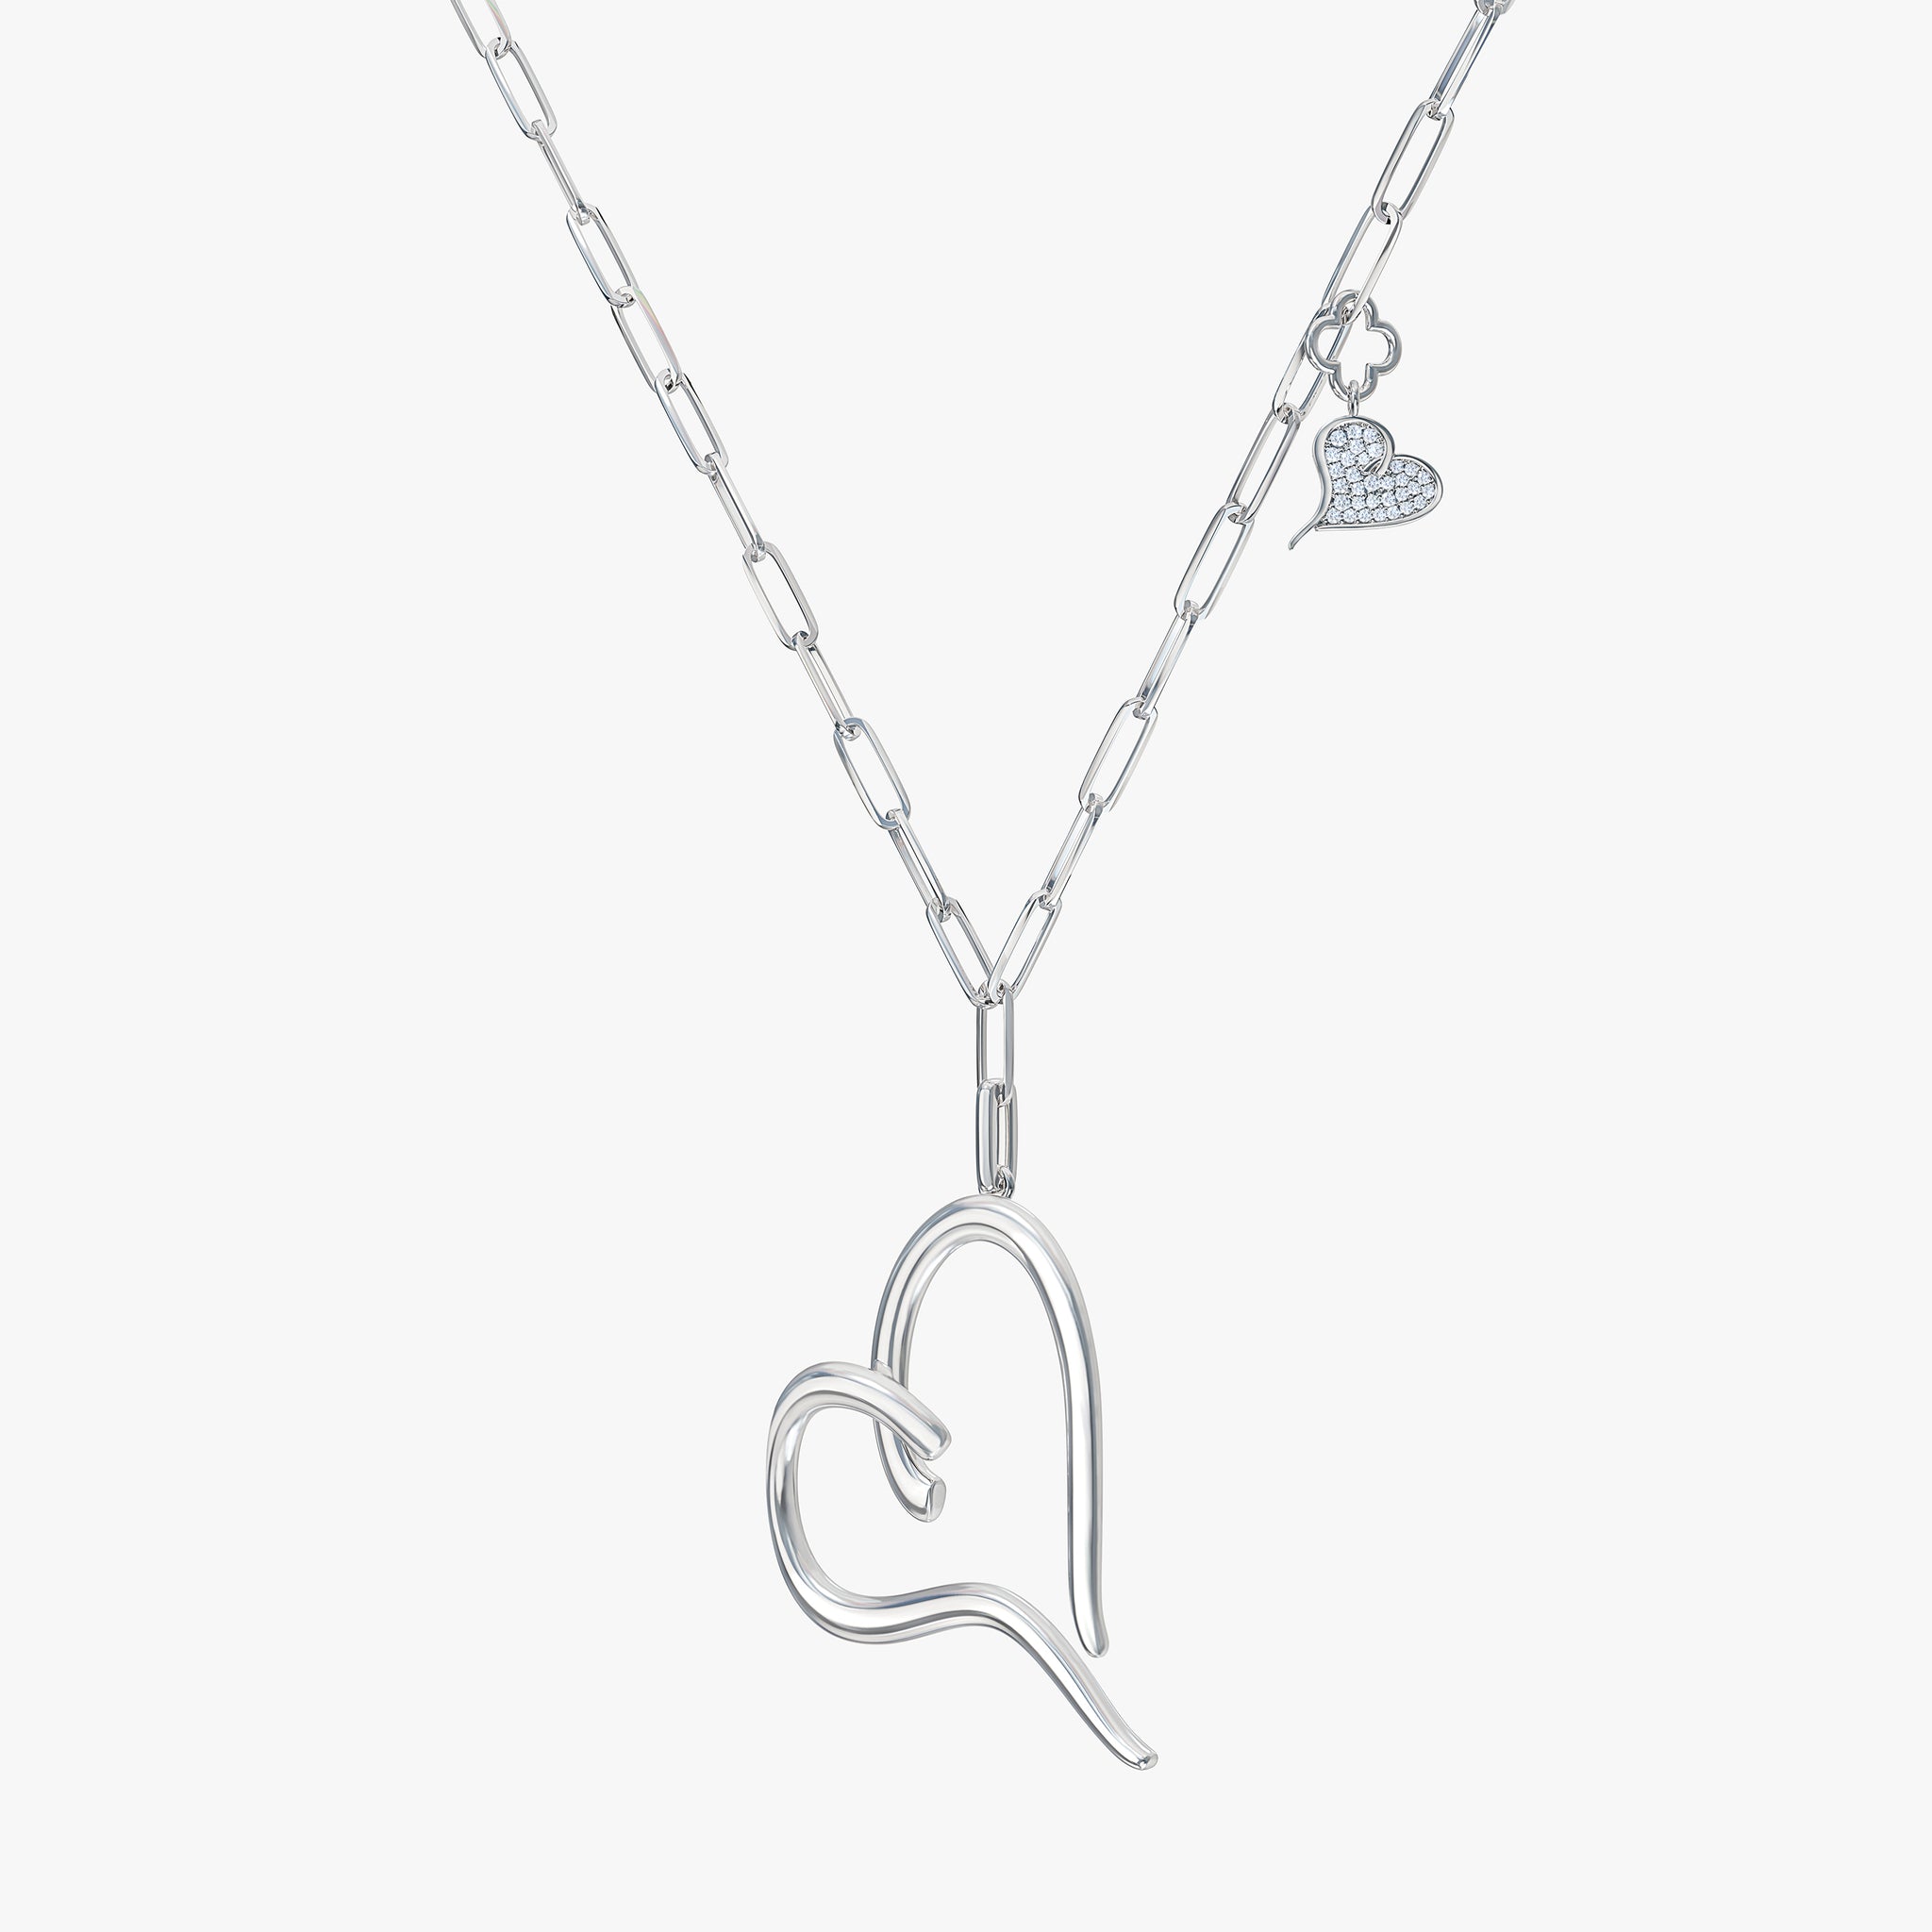 J'EVAR Sterling Silver Heart Charm ALTR Lab Grown Diamond Necklace Lock View